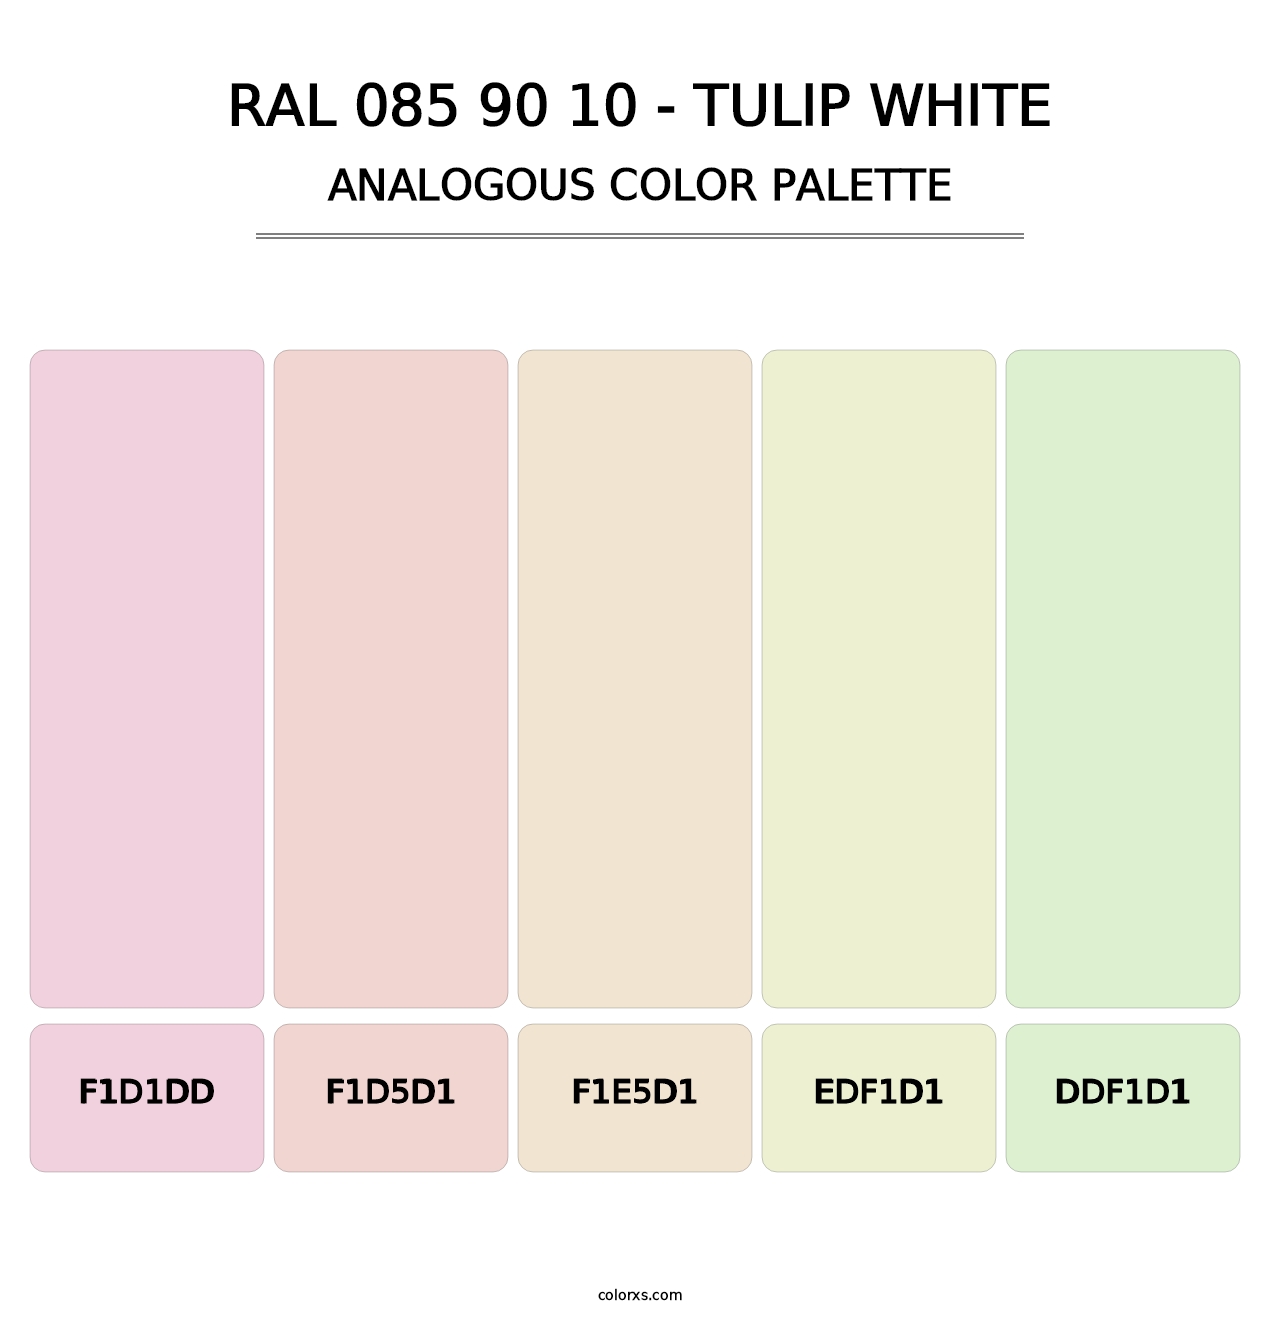 RAL 085 90 10 - Tulip White - Analogous Color Palette